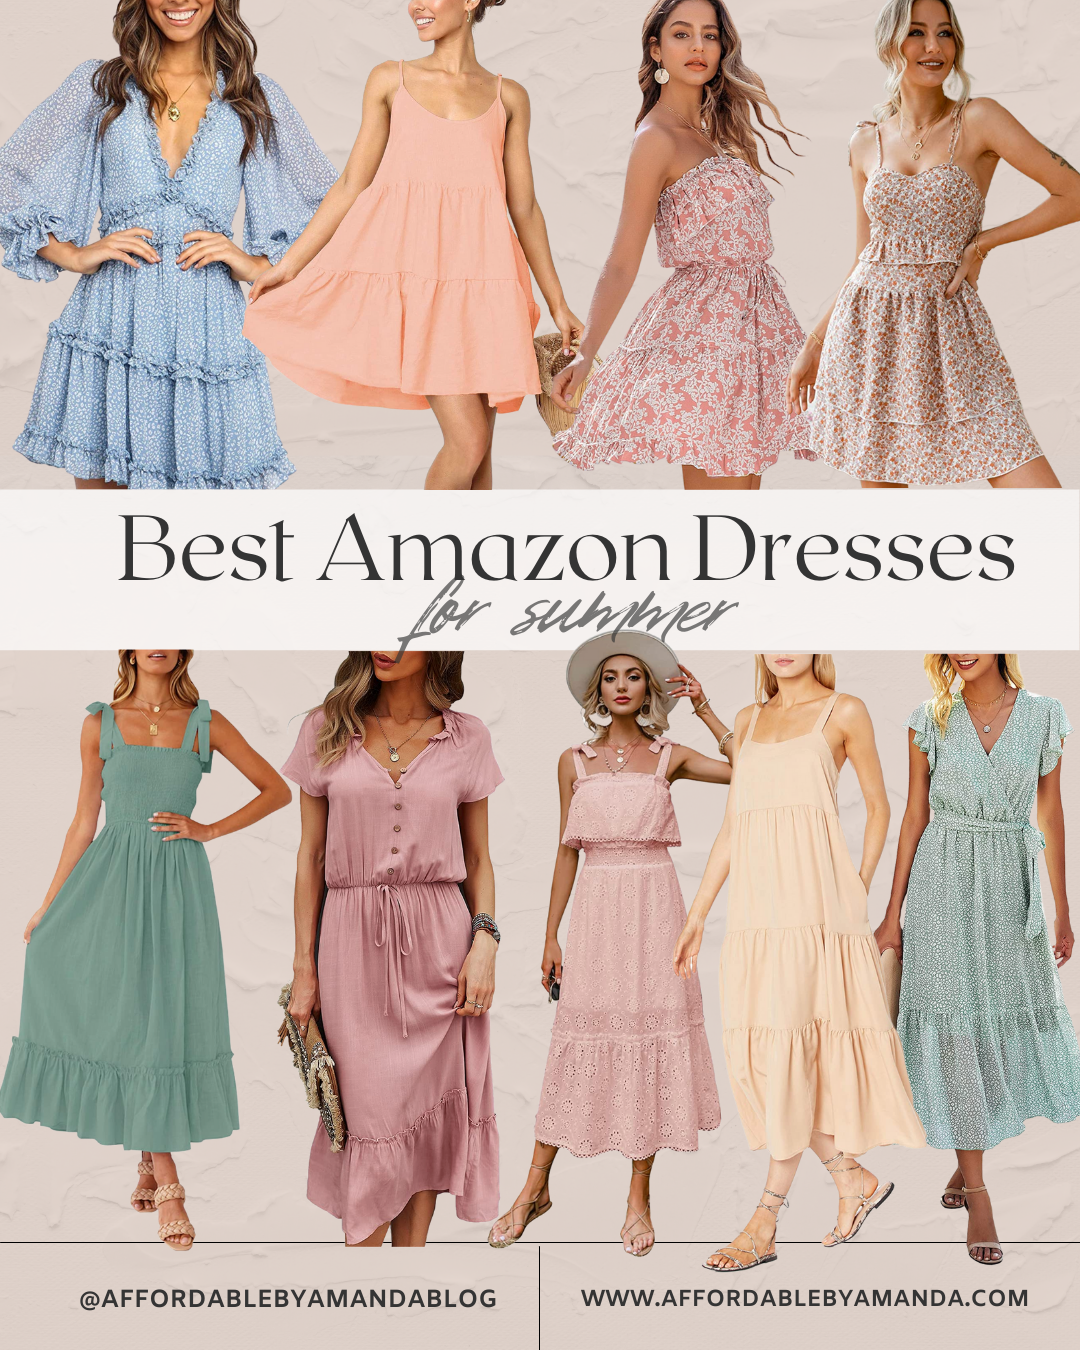 Best Amazon Dresses 2021 - Amazon Summer Dresses 2021 - Best Summer Dresses on Amazon 2021 - Best Amazon Casual Dresses - Affordable by Amanda